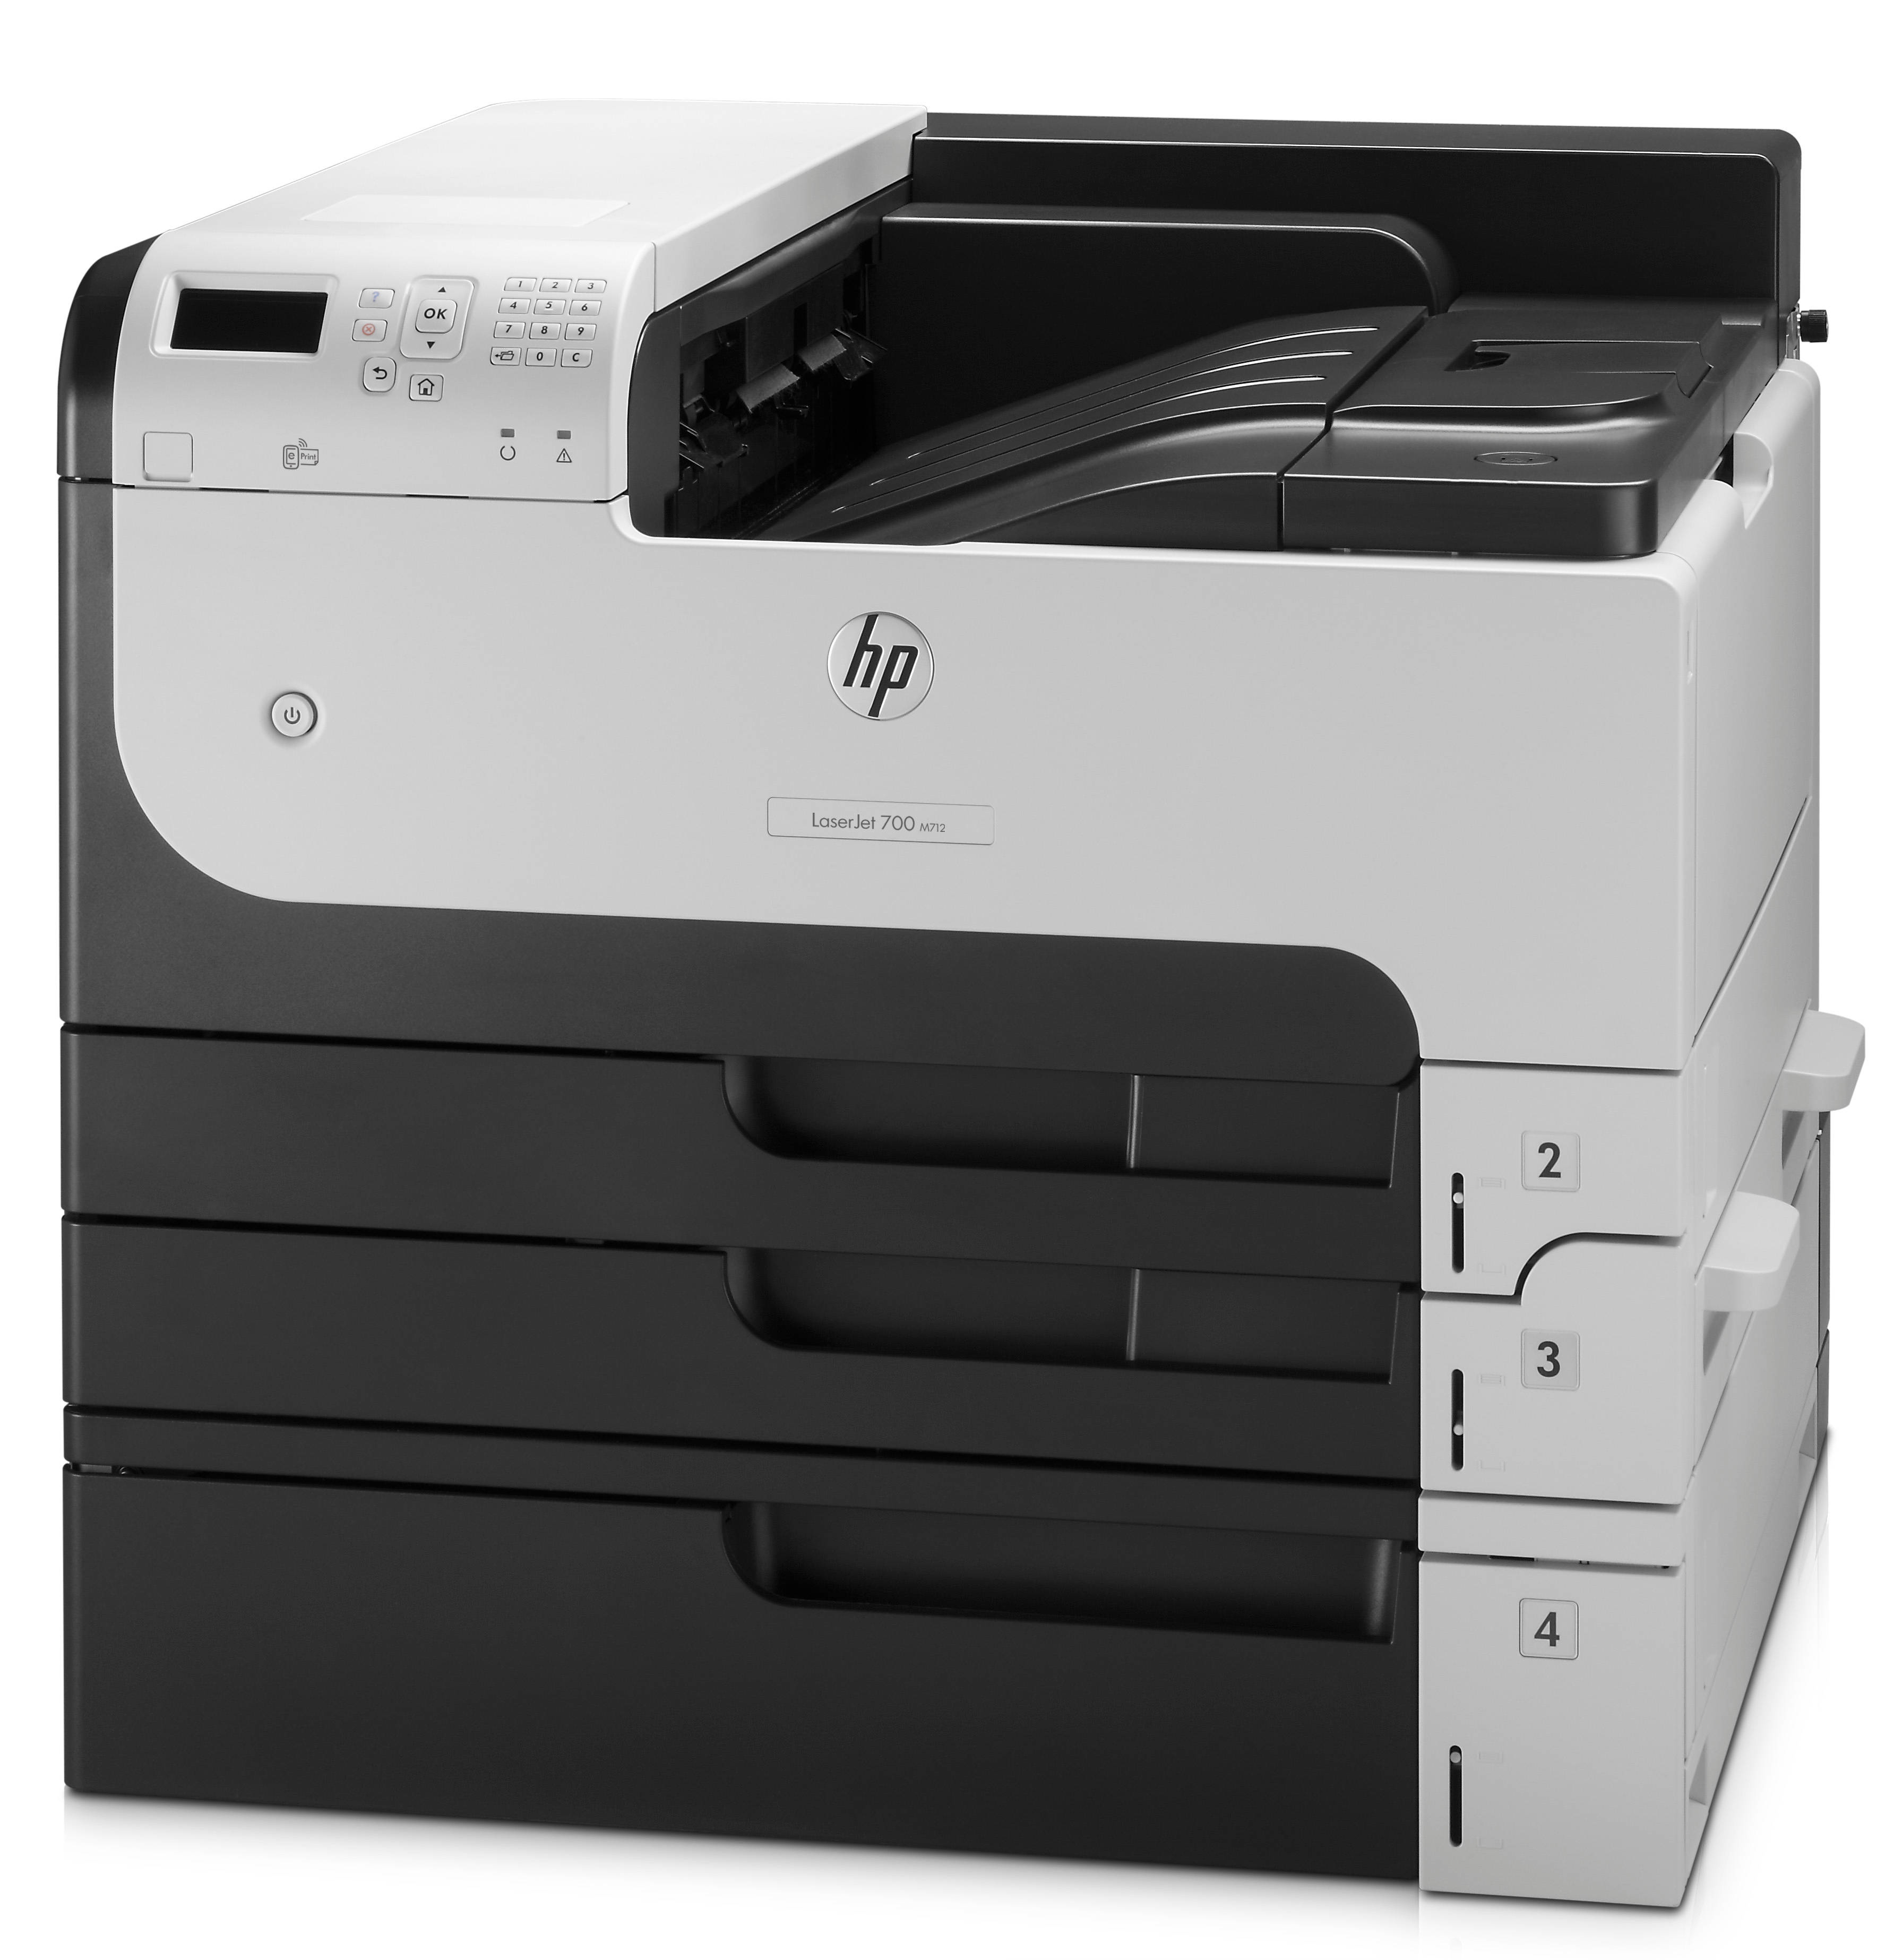 Hp printer utility help - popter